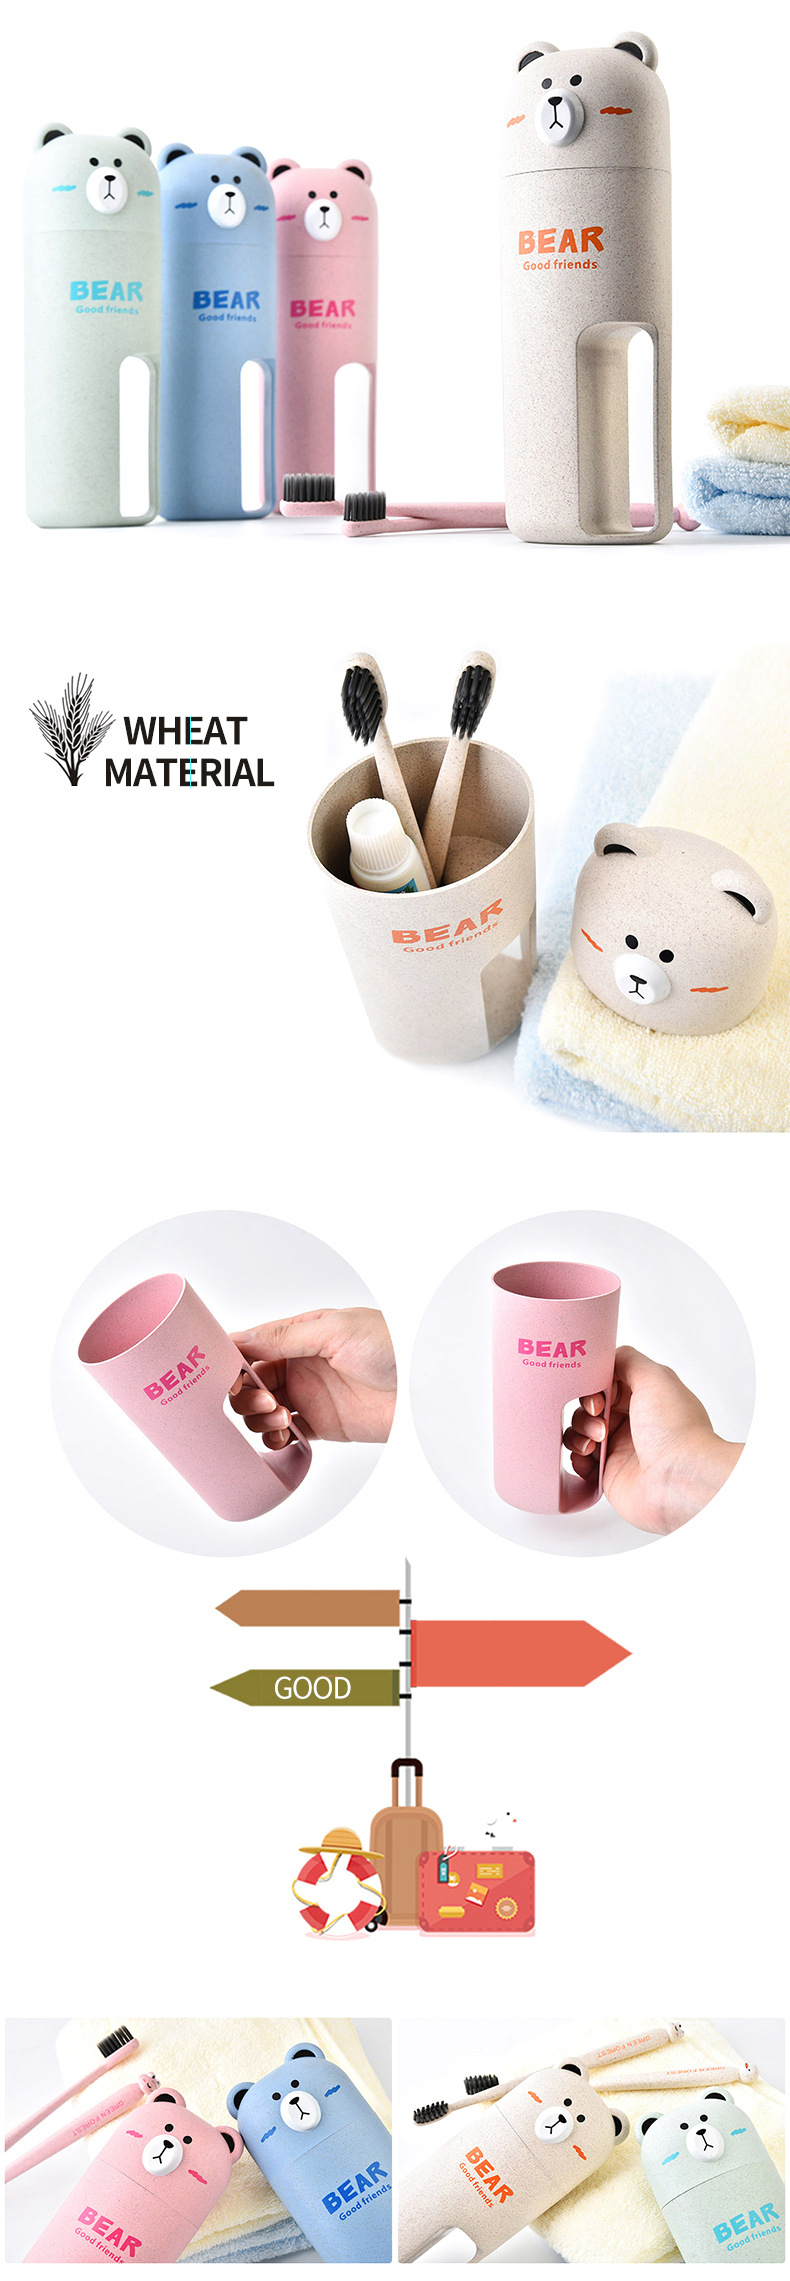 Honana-Cute-Bear-Travel-Portable-Toothbrush-Handle-Cup-Design-4-Color-Options-Organizer-Storage-Box-1295947-5